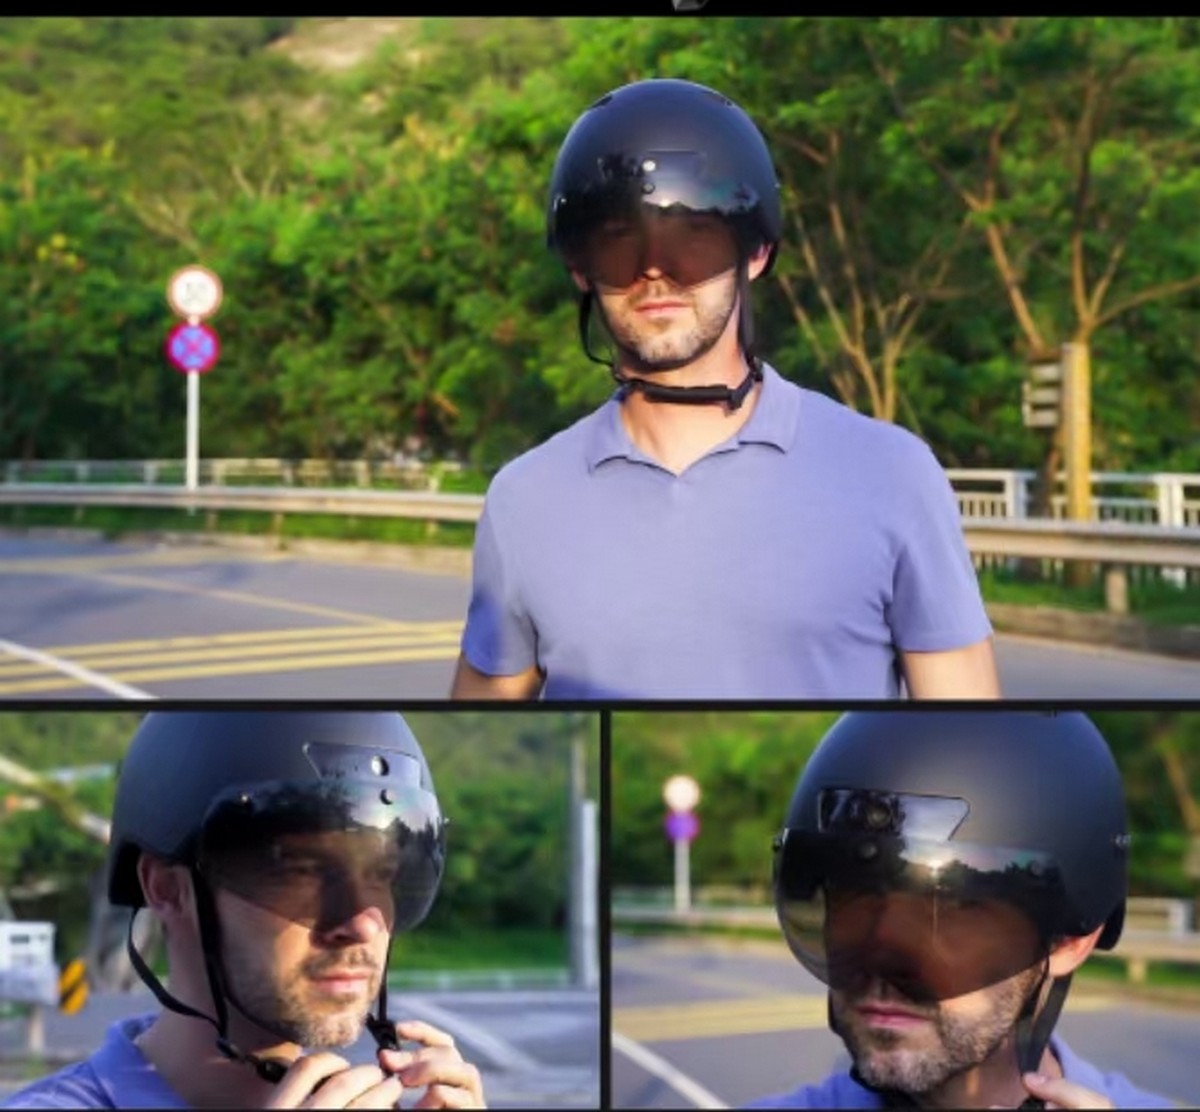 capacete de bicicleta de estrada com piscas